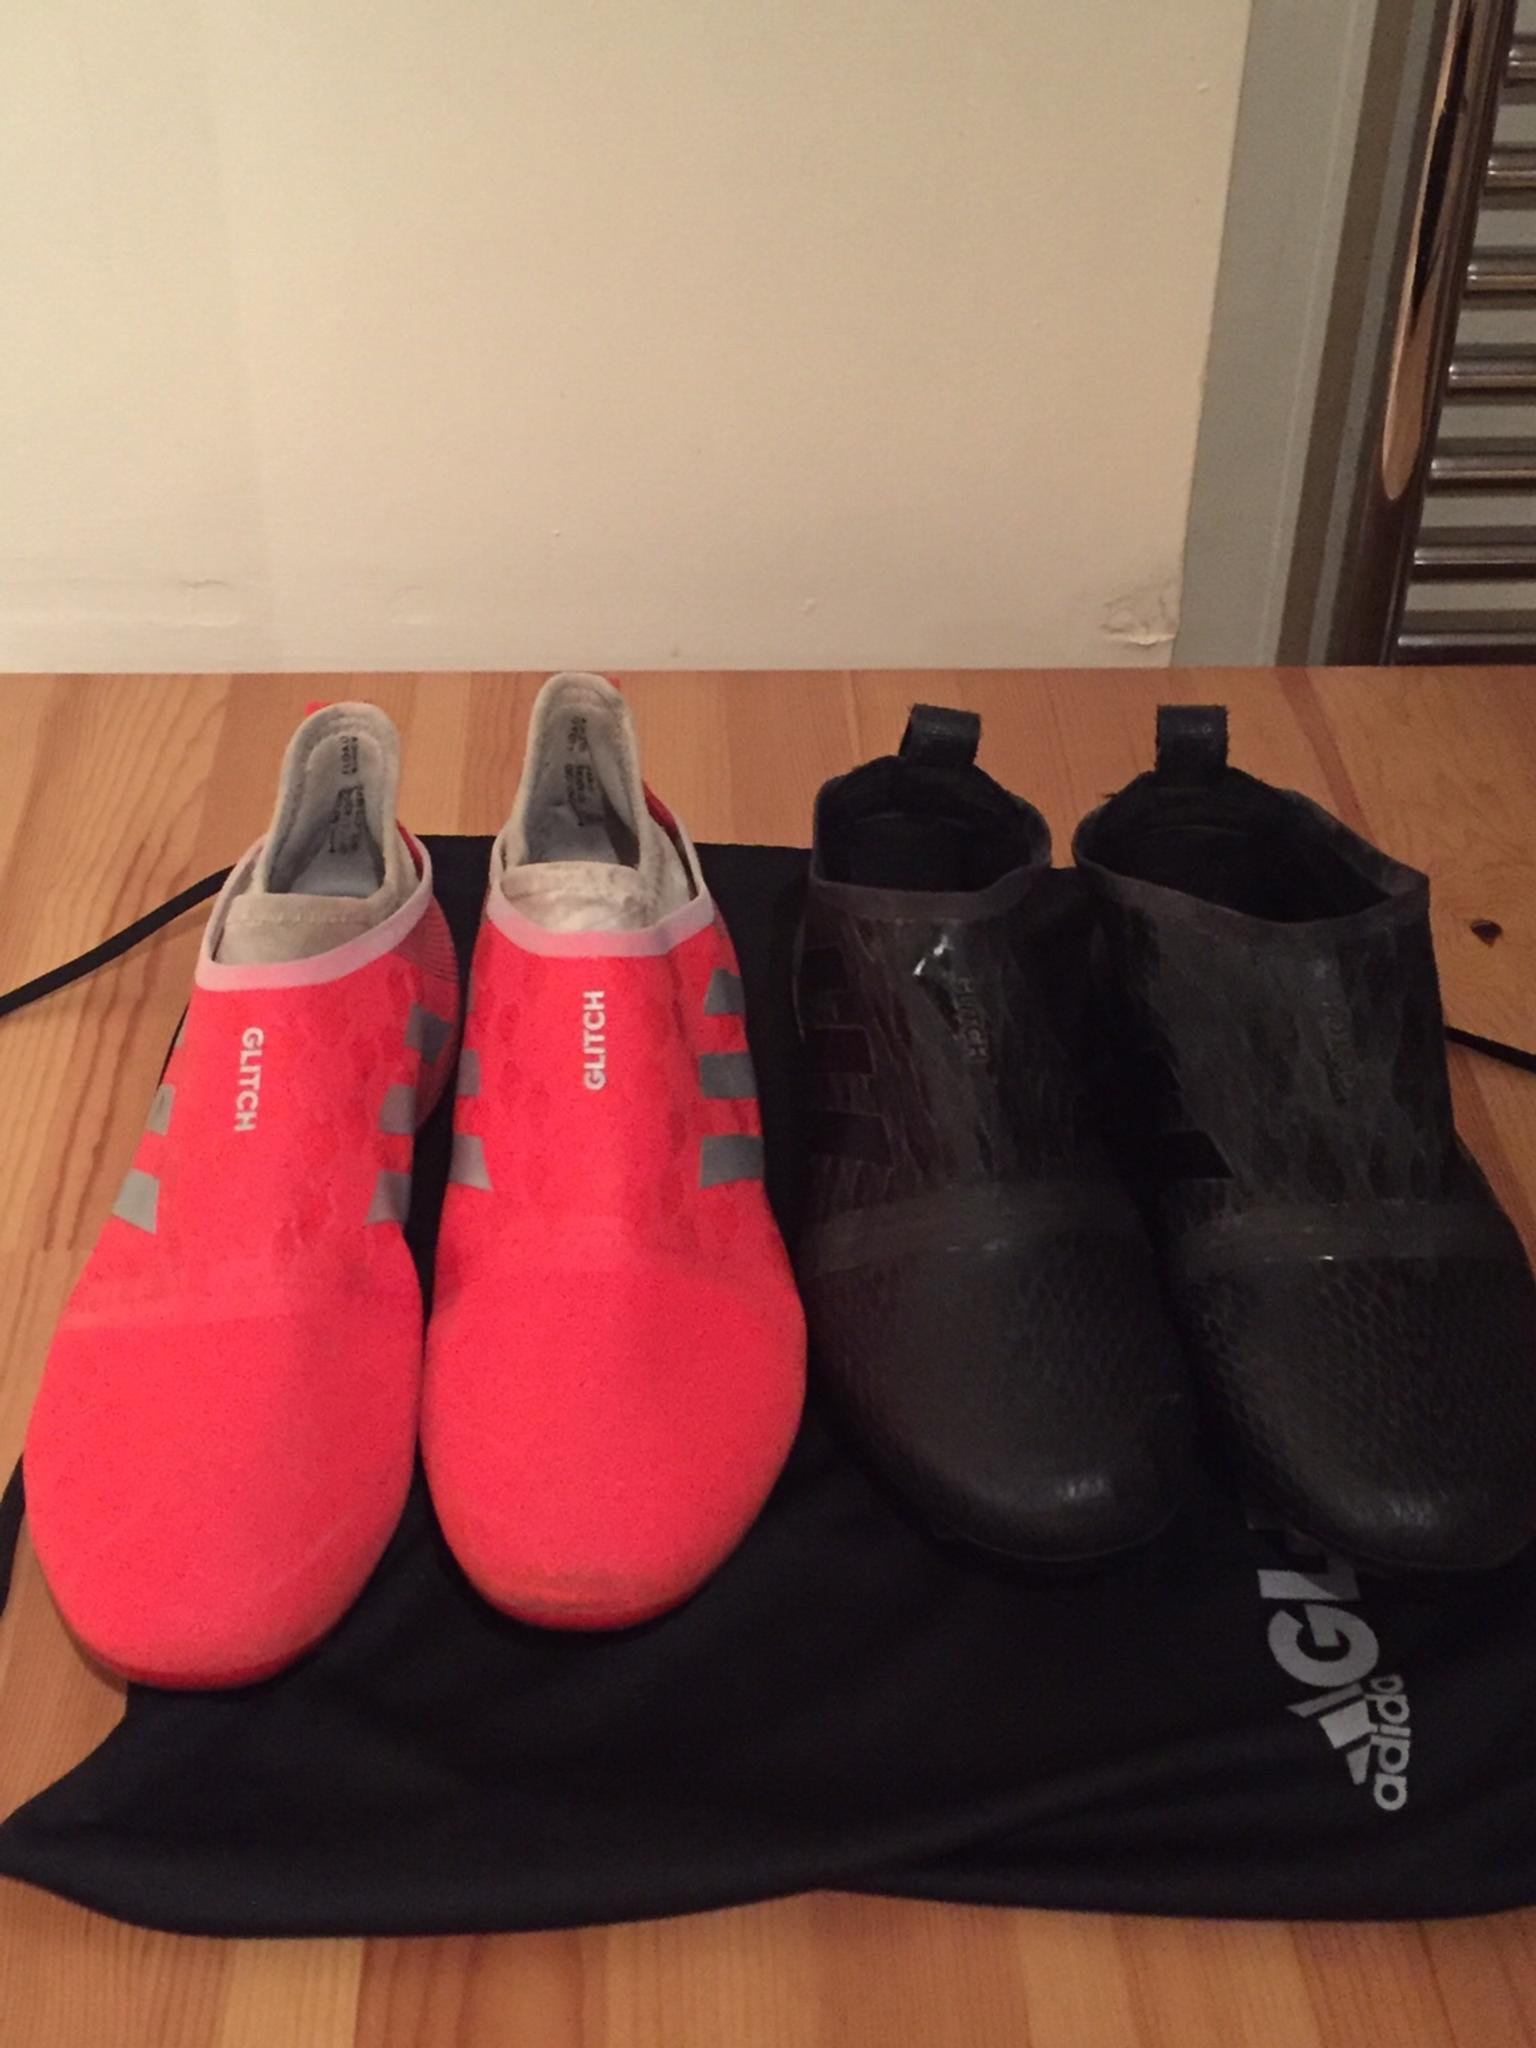 adidas GLITCH Football Boots - Size 8 